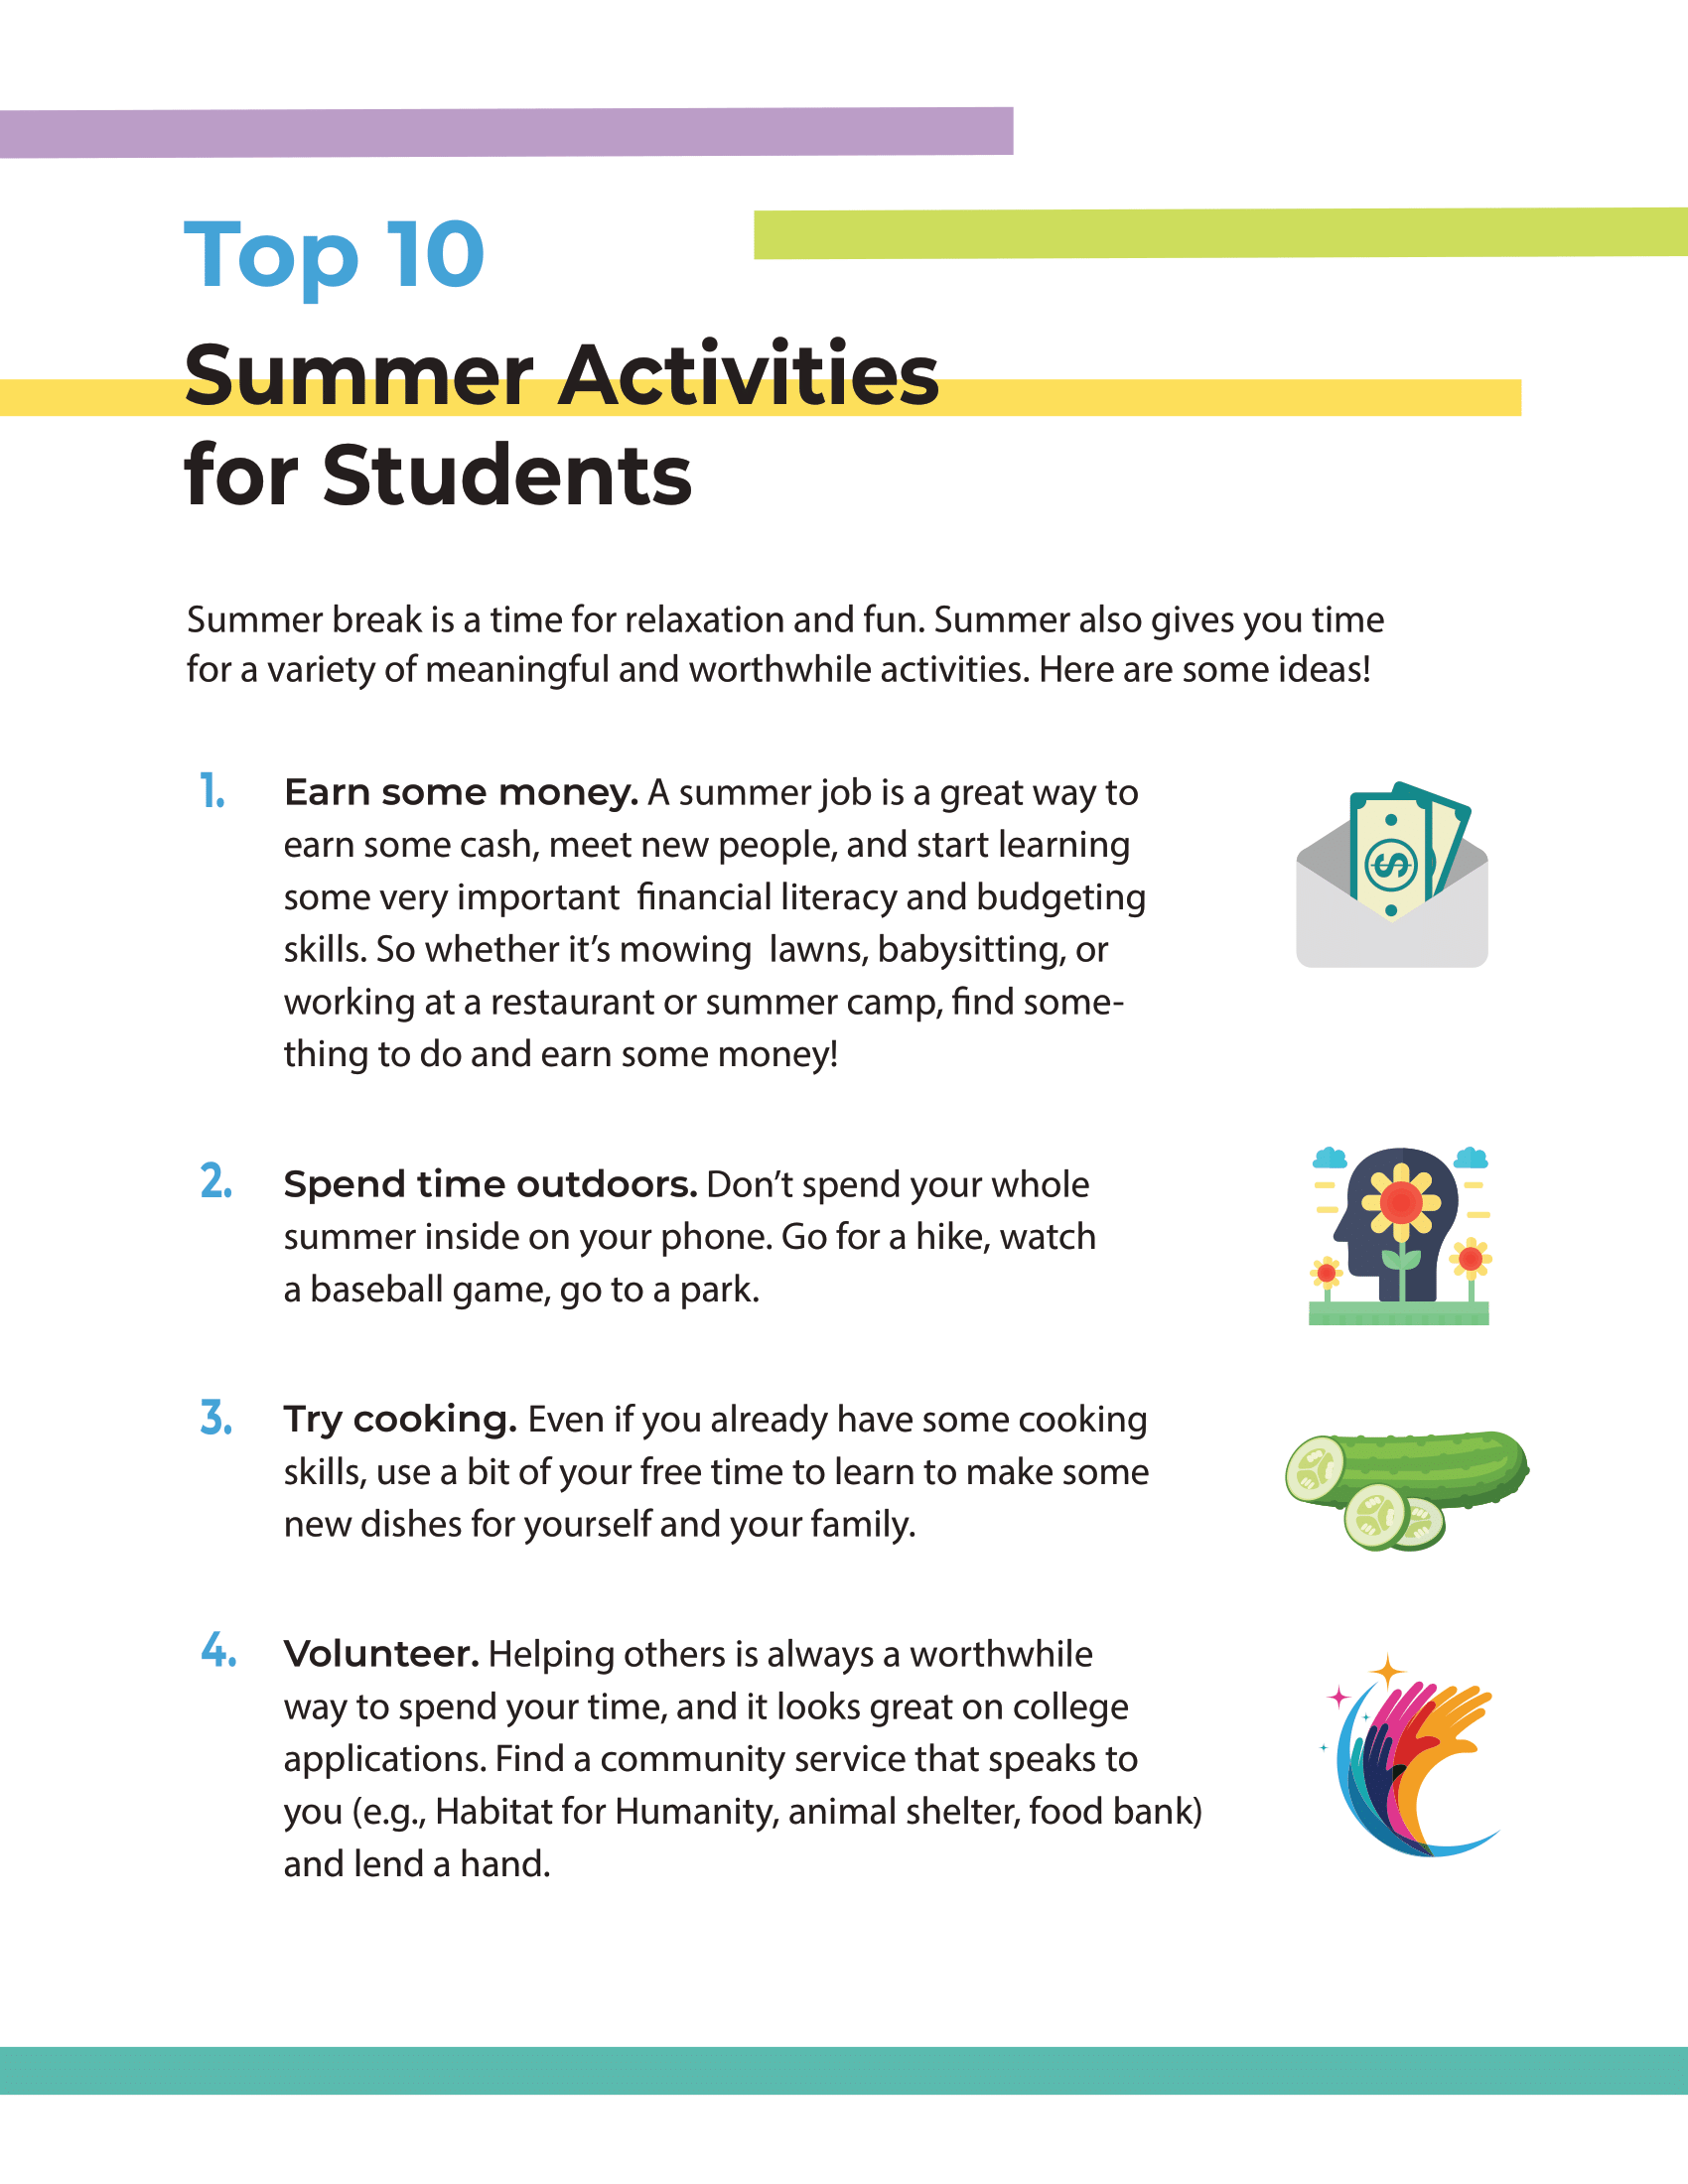 Top 10 Summer Activities for Students